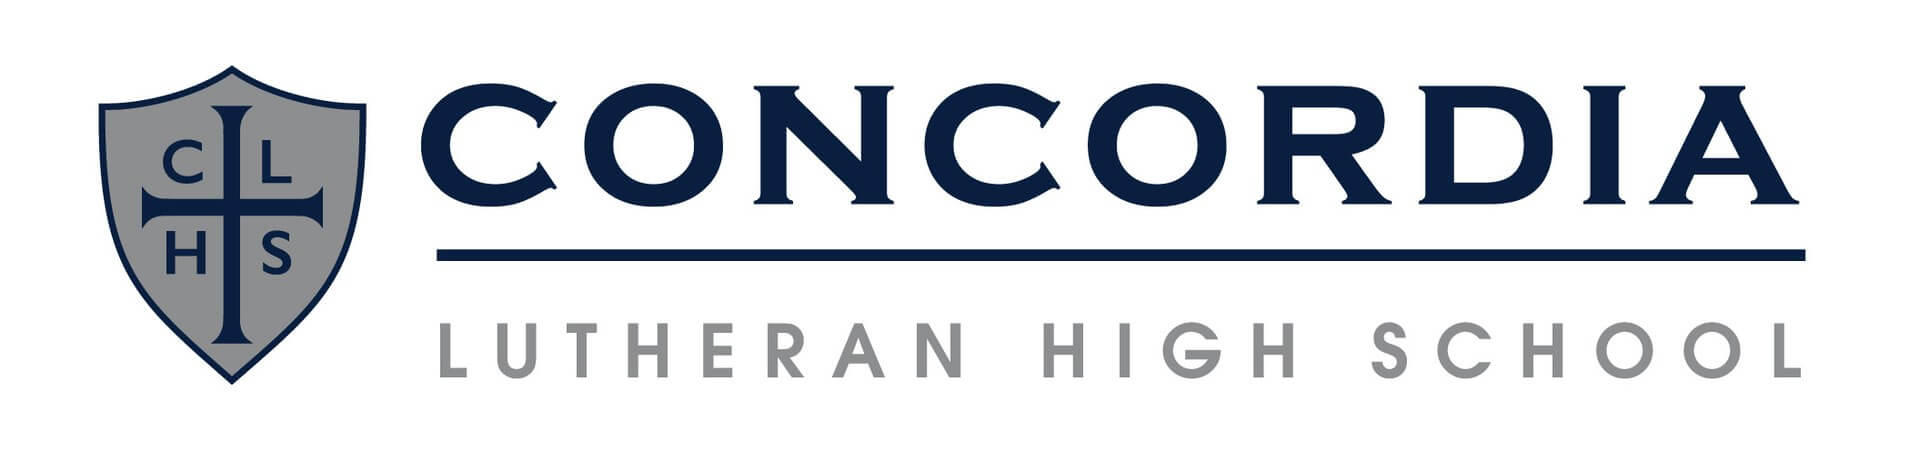 Concordia Lutheran High School